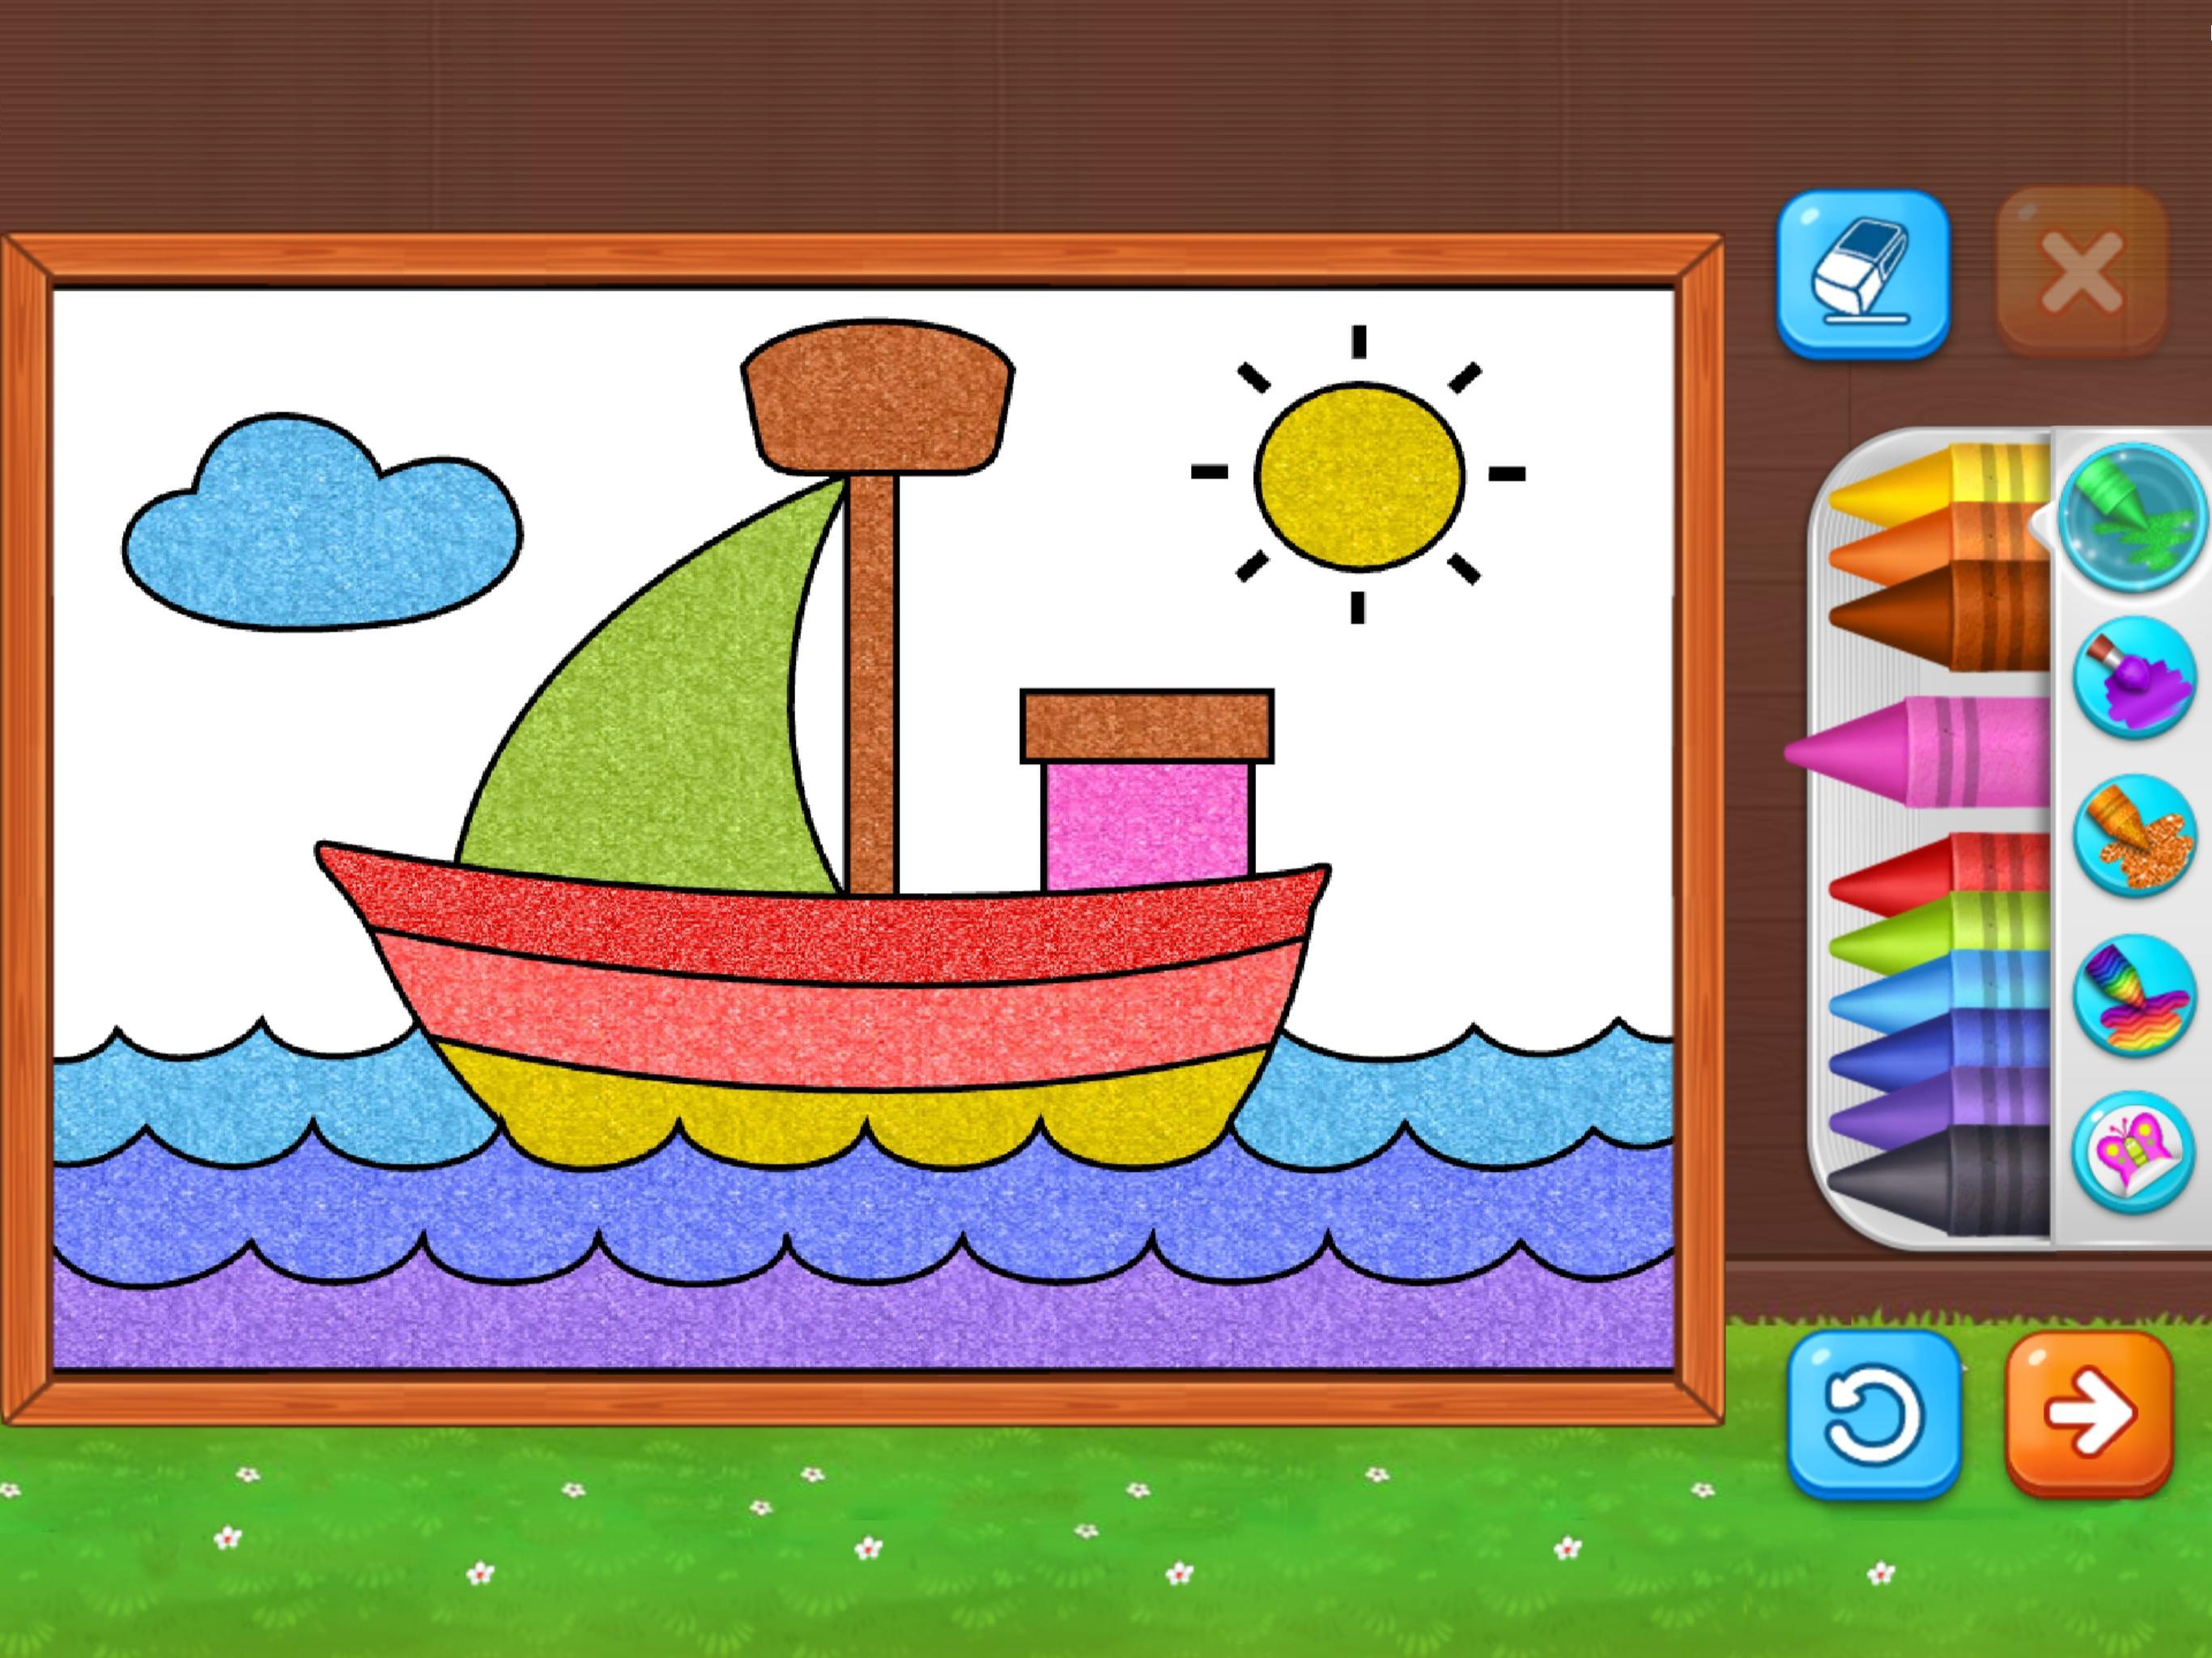 Coloring Games Coloring Book, Painting, Glow Draw 1.0.7 Screenshot 21